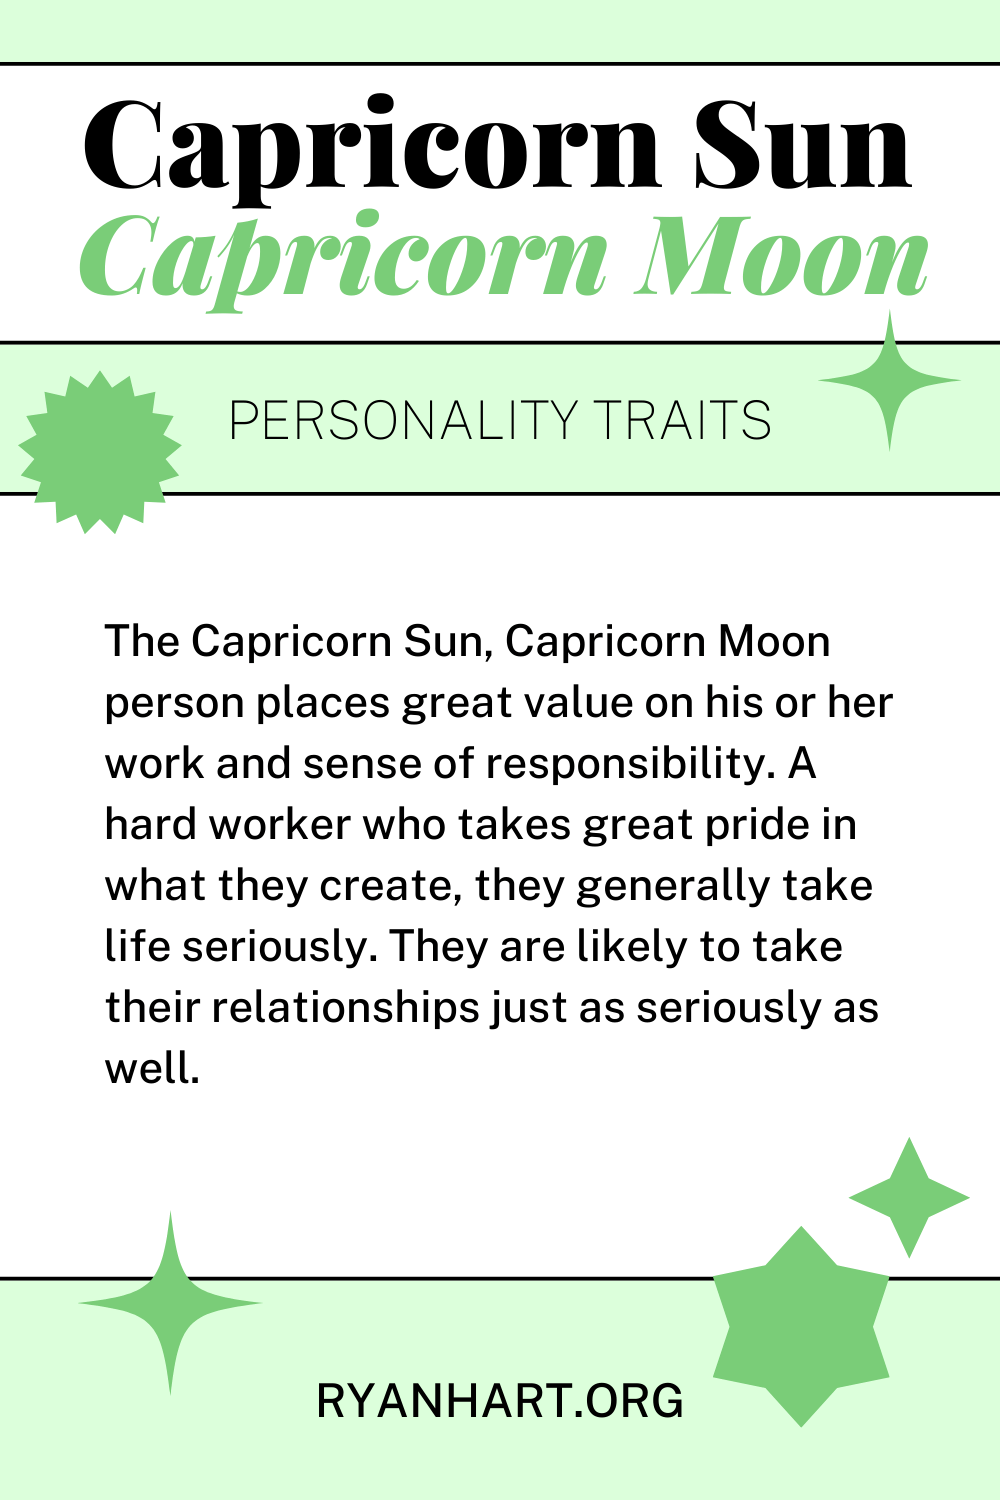 Capricorn Sun Capricorn Moon Description